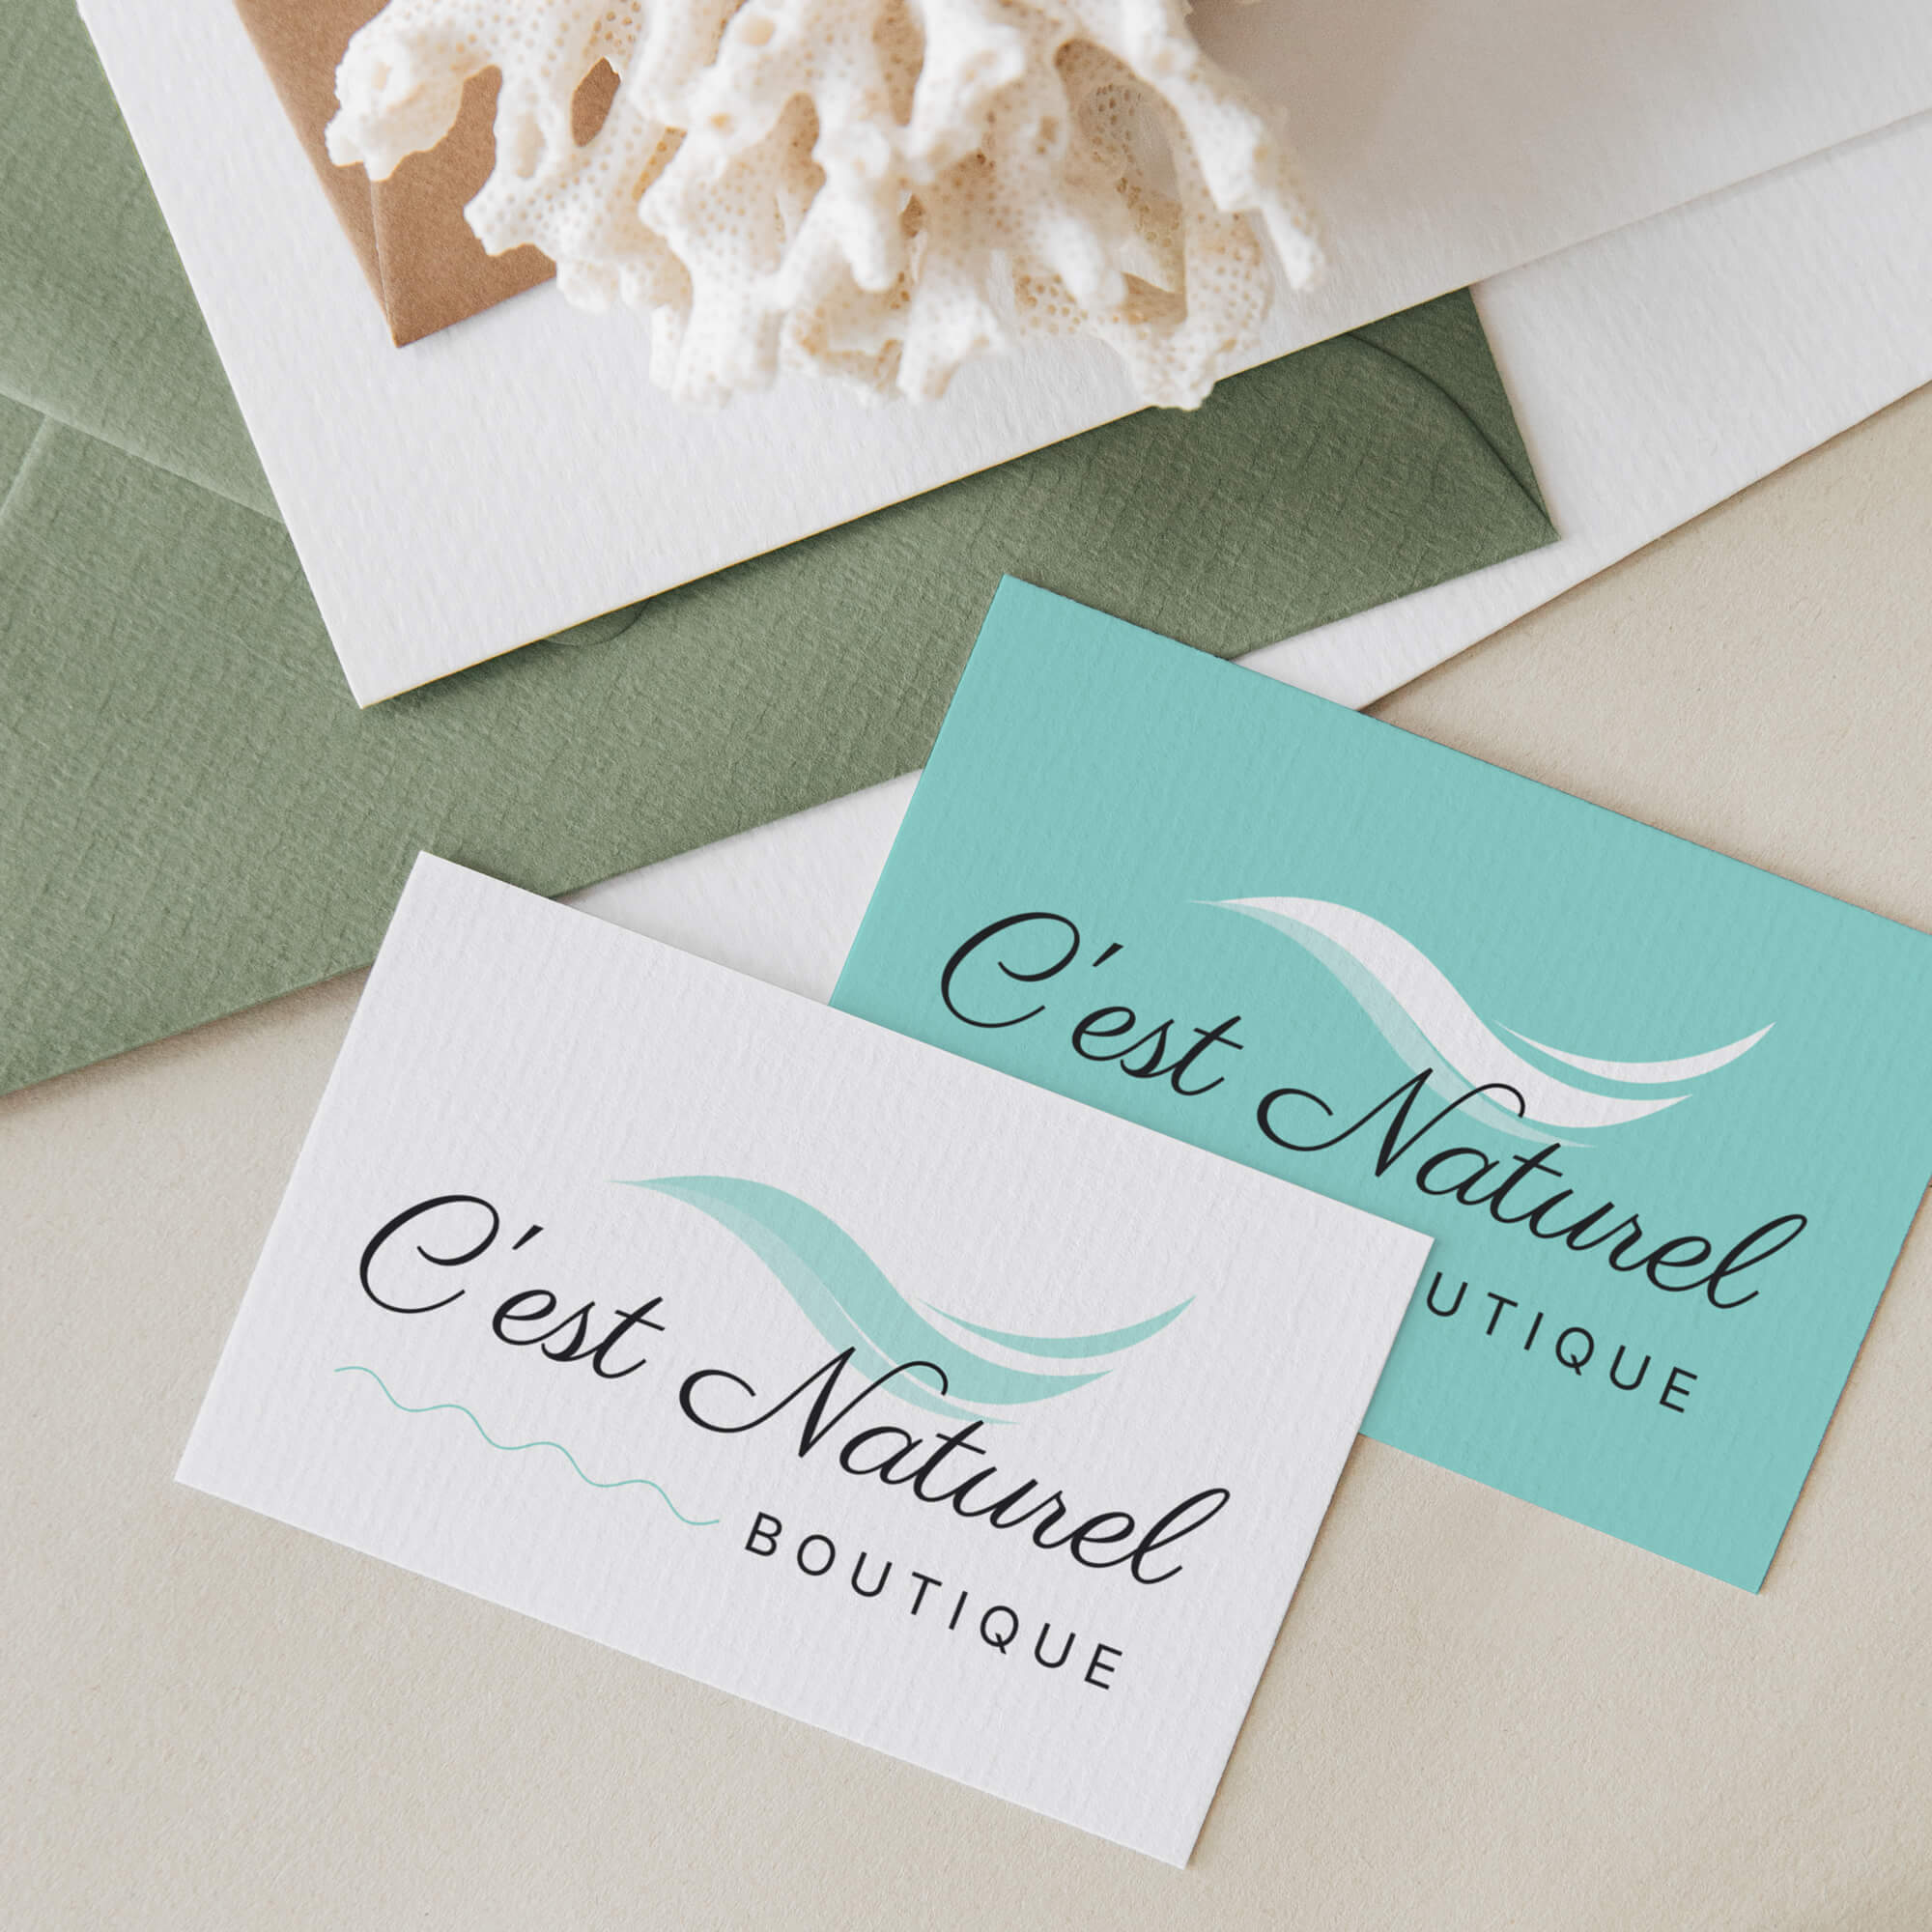 Logo design and social media marketing for C'est Naturel Boutique by Tulip Tree Creative